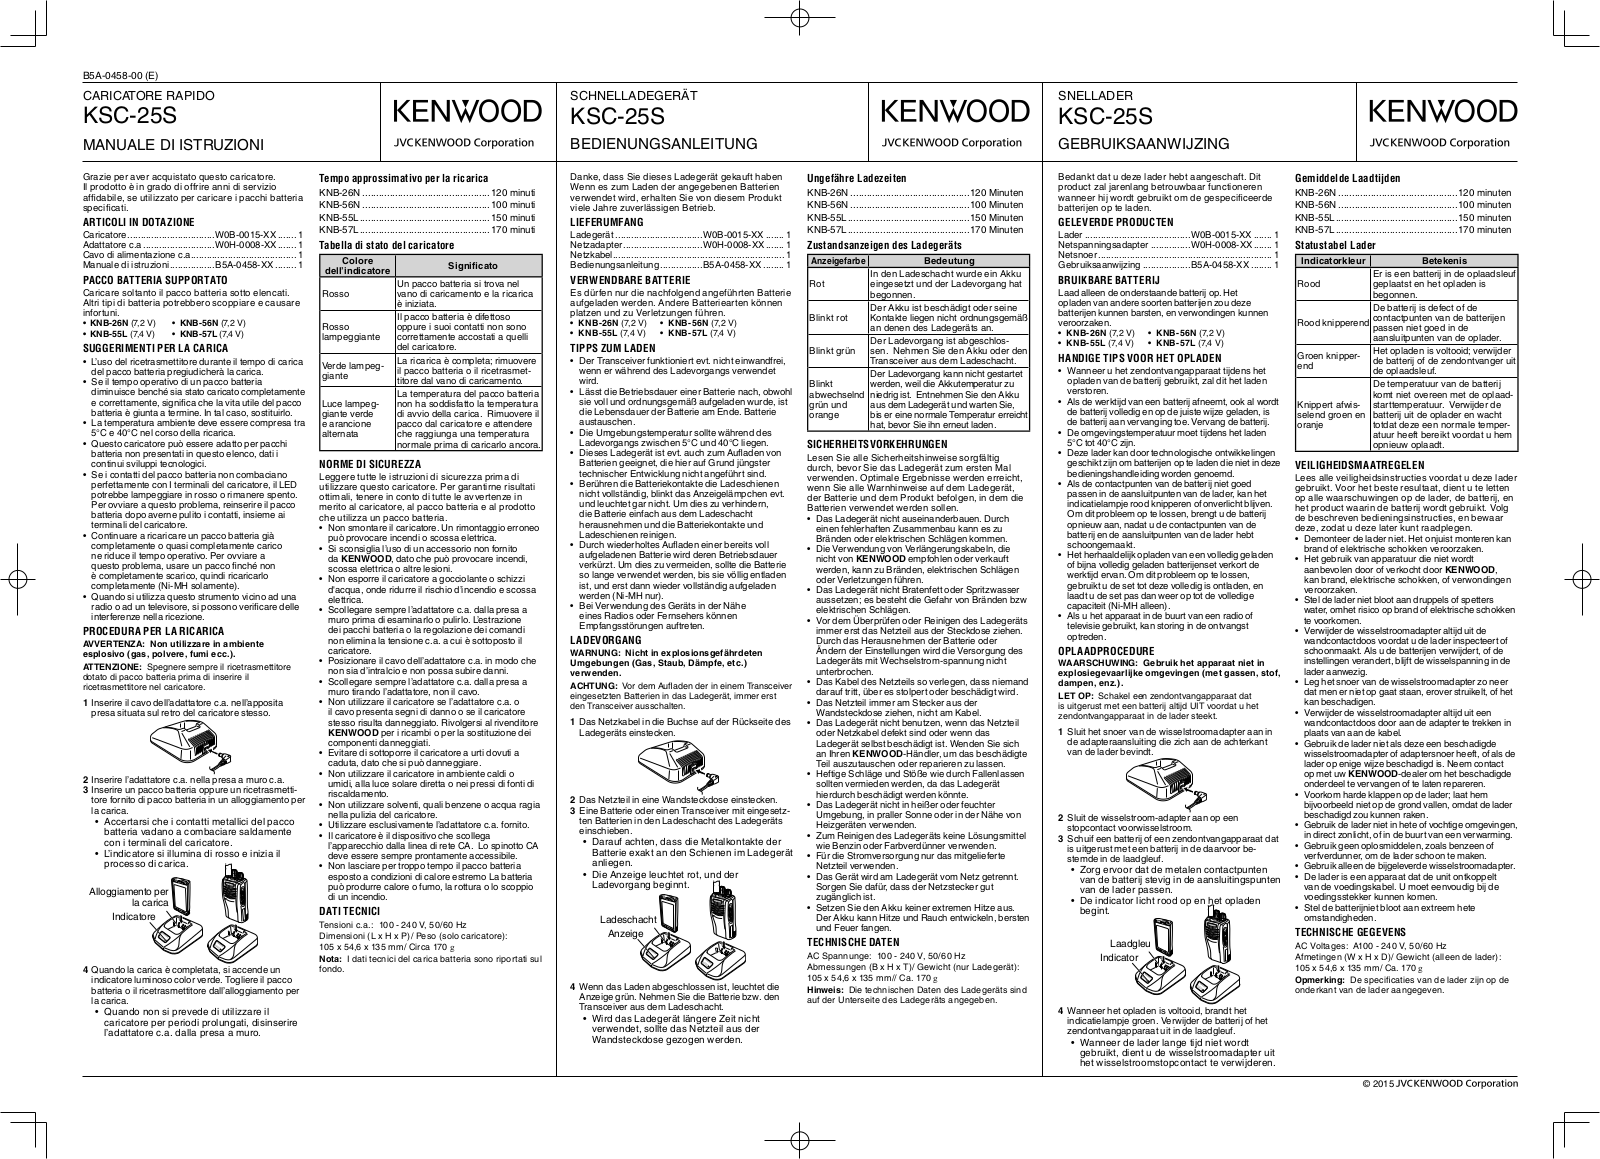 Kenwood KSC-25S Operation Manual